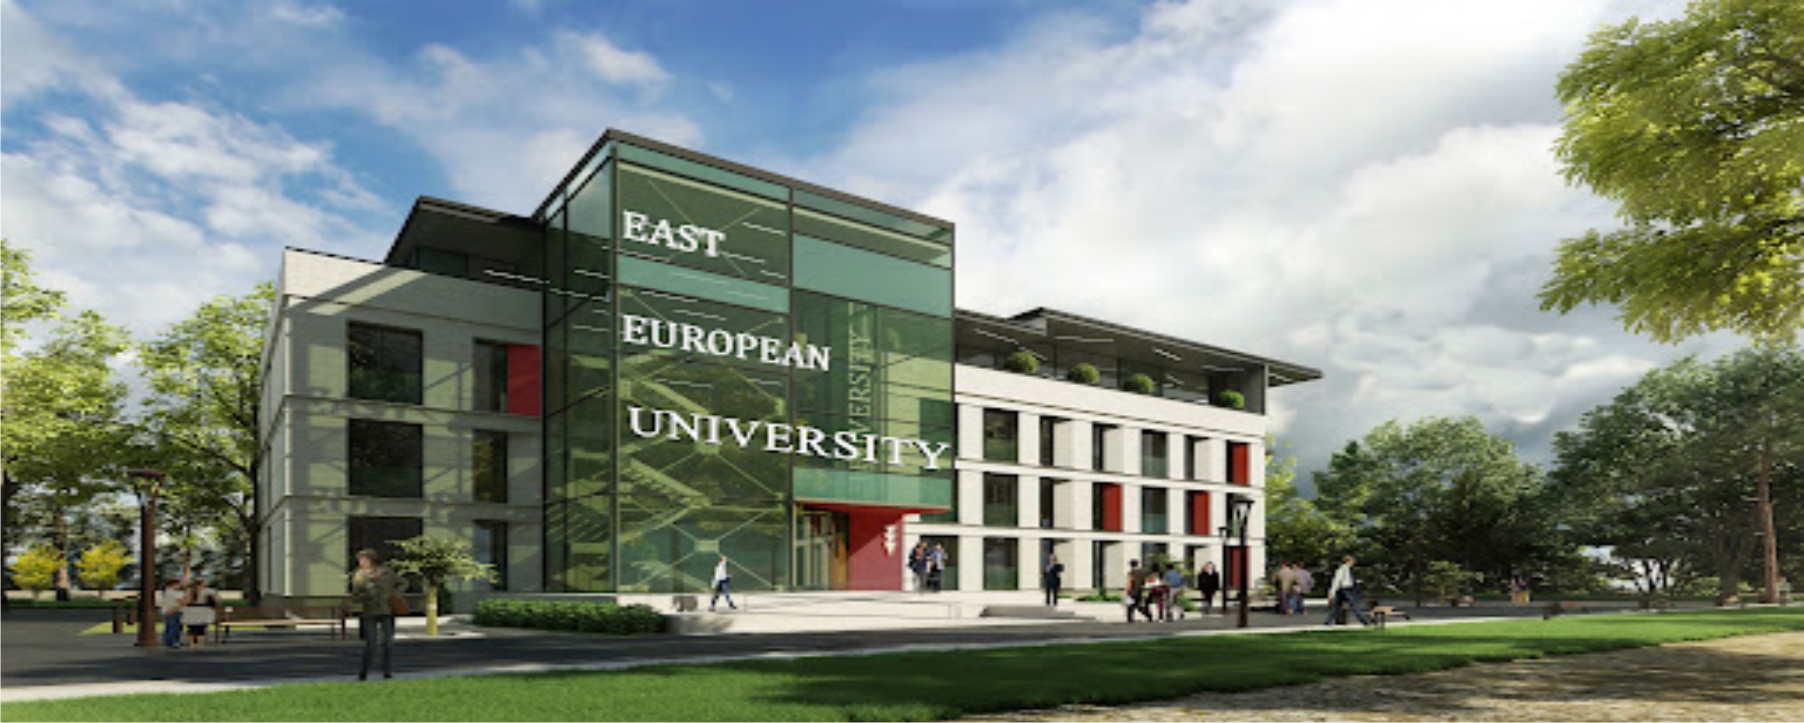 East European University NEW 7